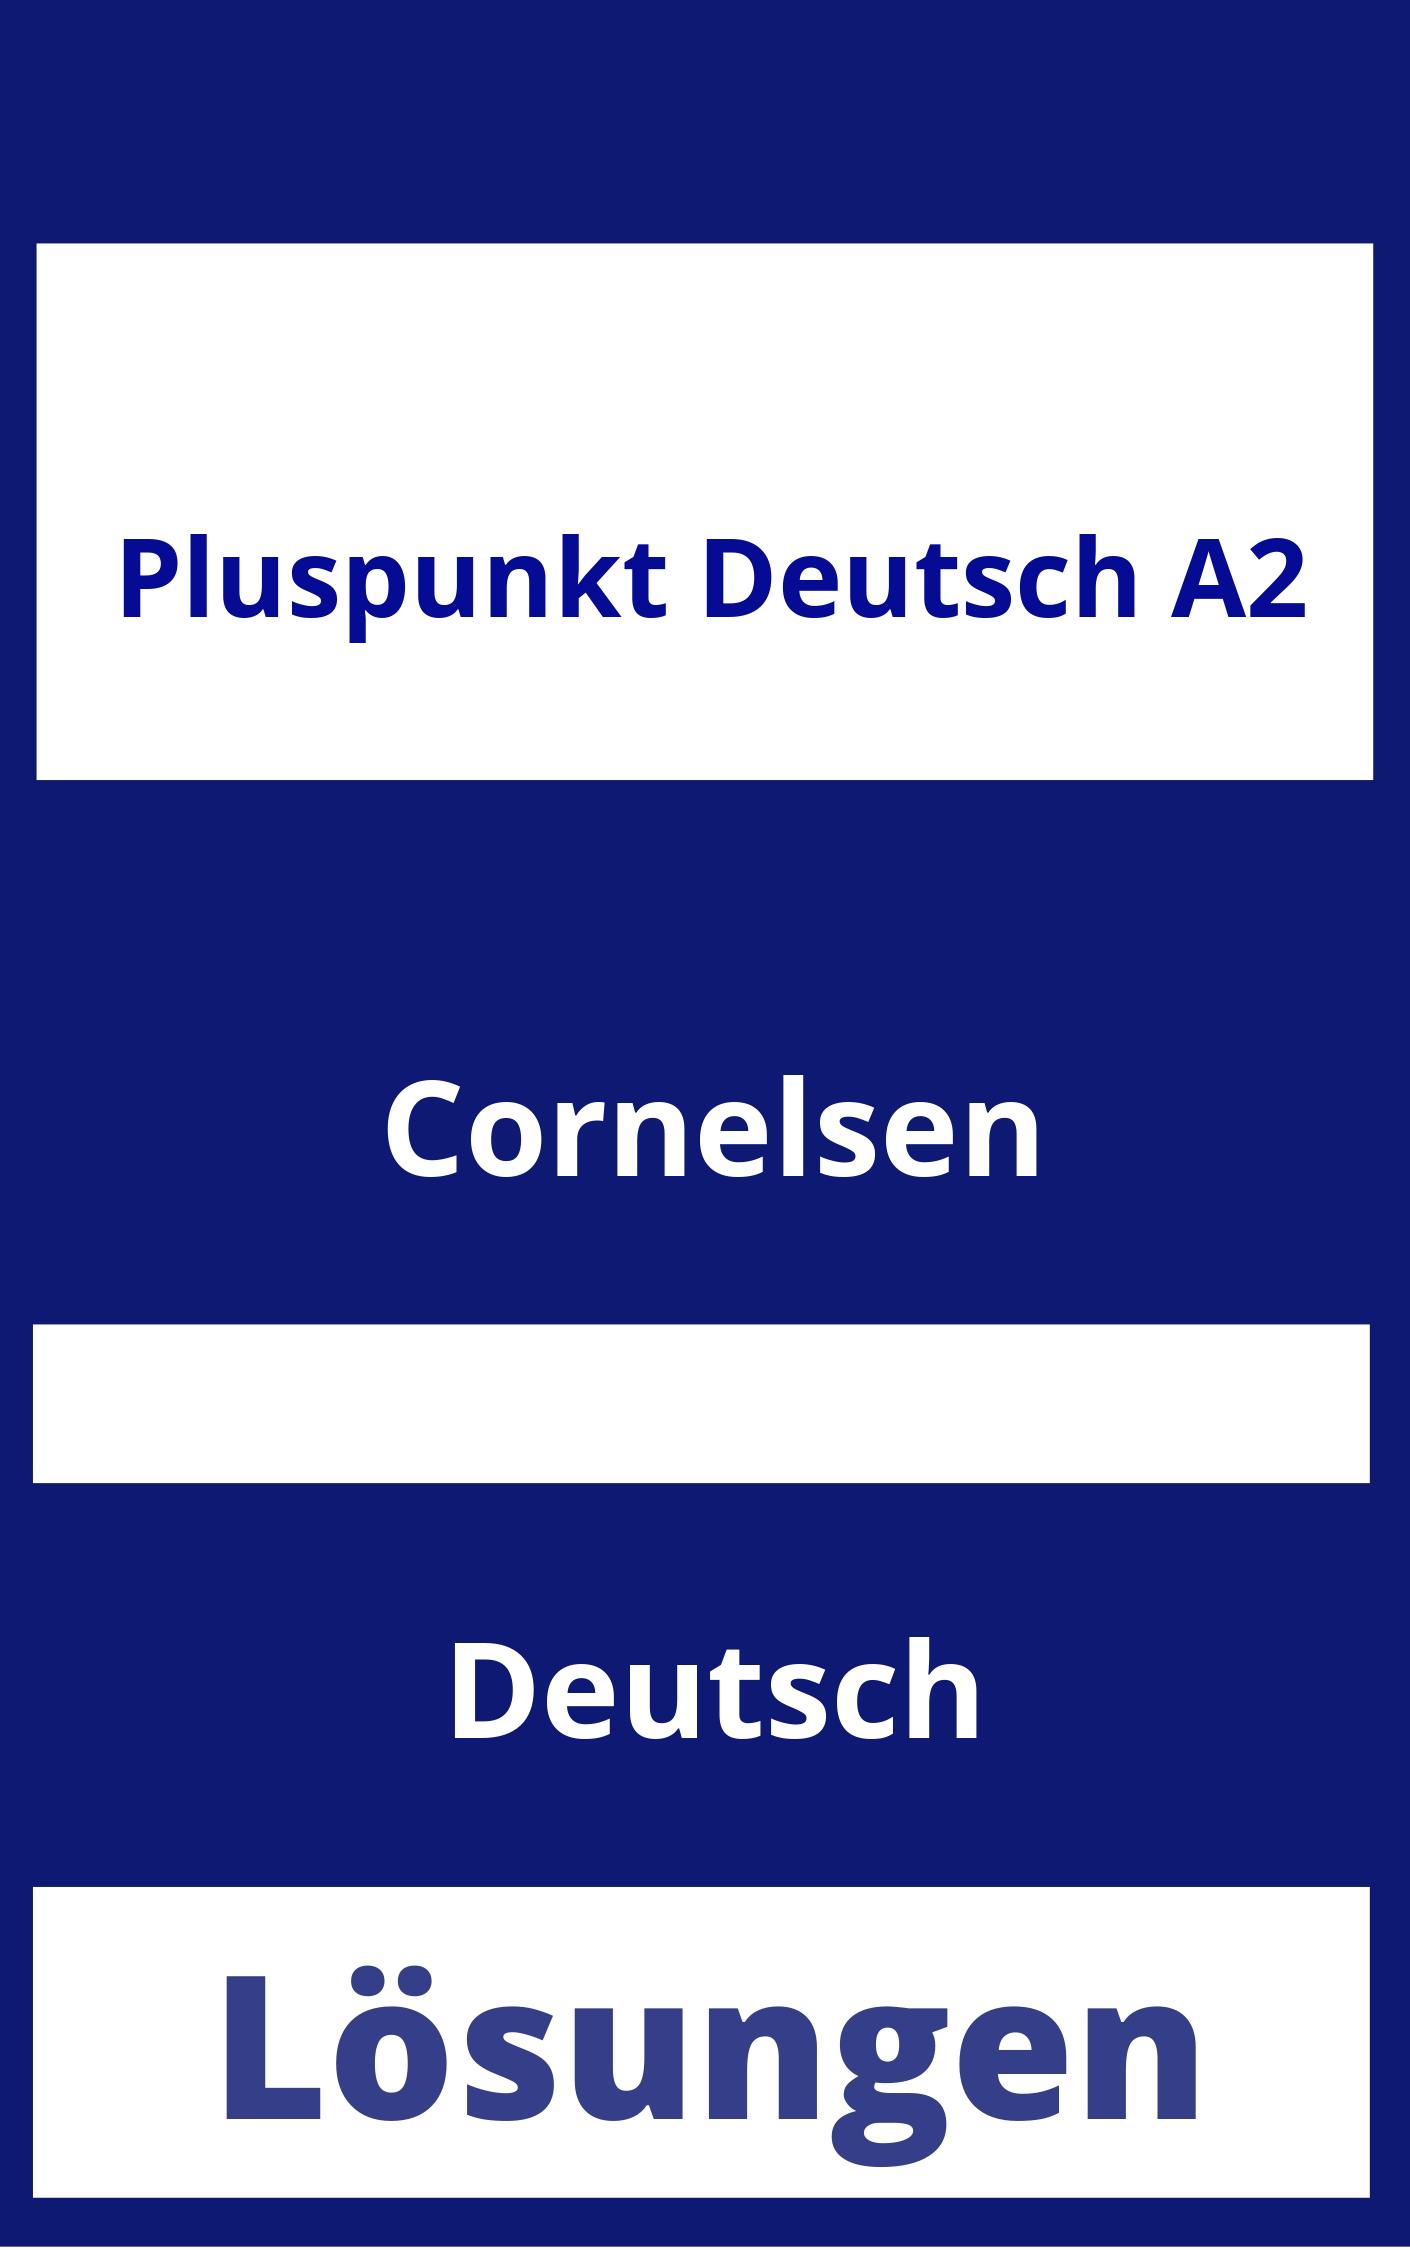 Pluspunkt Deutsch A2 Lösungen PDF